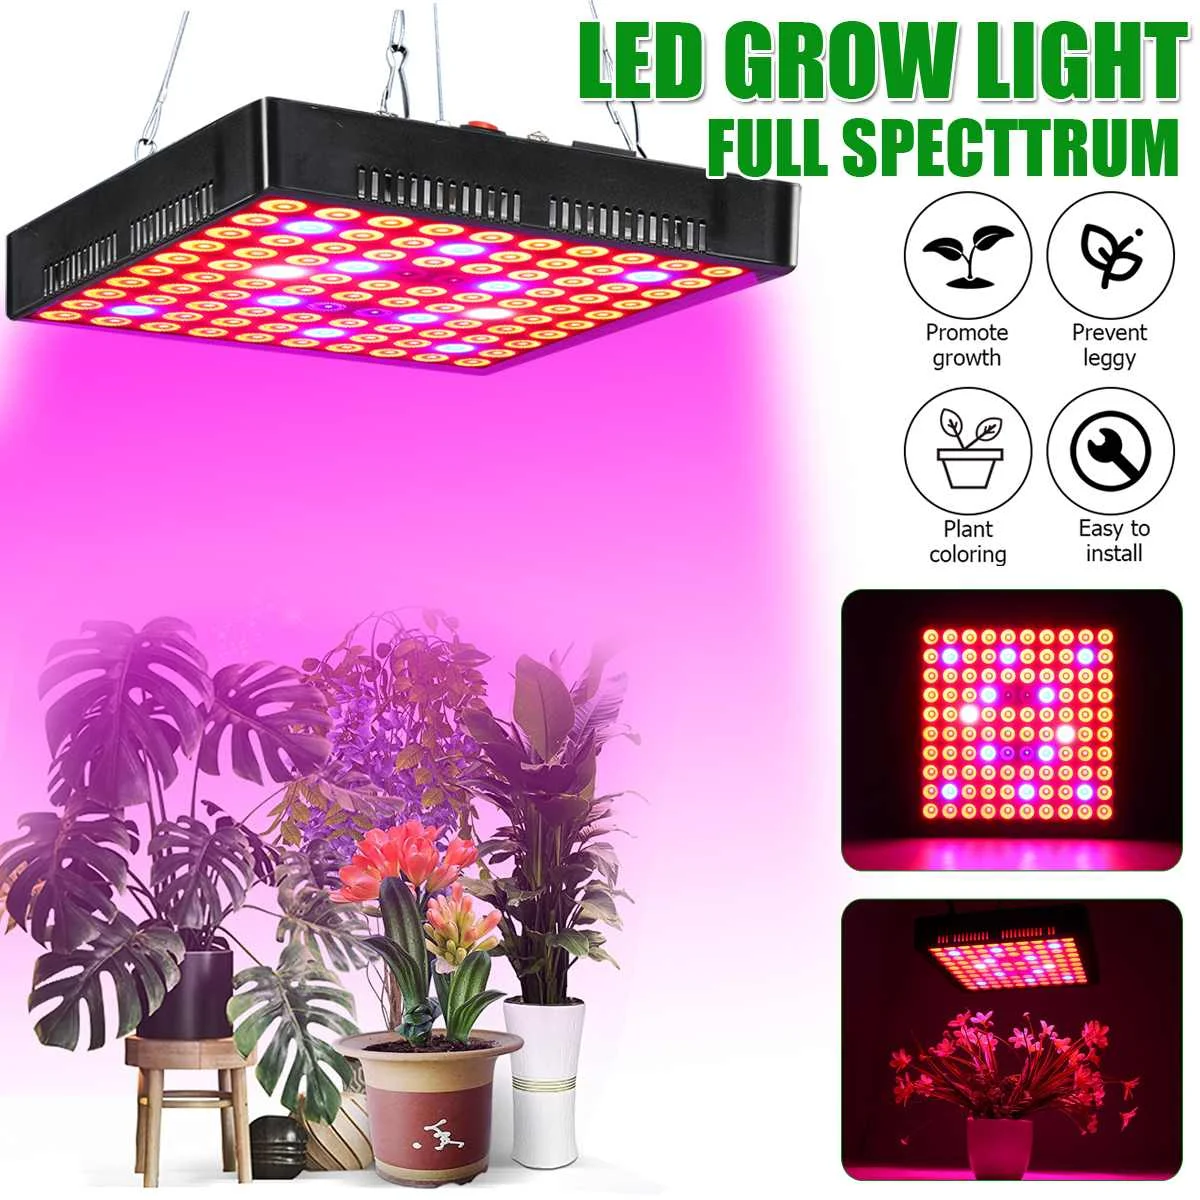 

3000W LED Grow Light Full Spectrum Phytolamp Plants lamp Tent Greenhouse Hydroponic Seedlingg Flower Vegetables AC85-265V